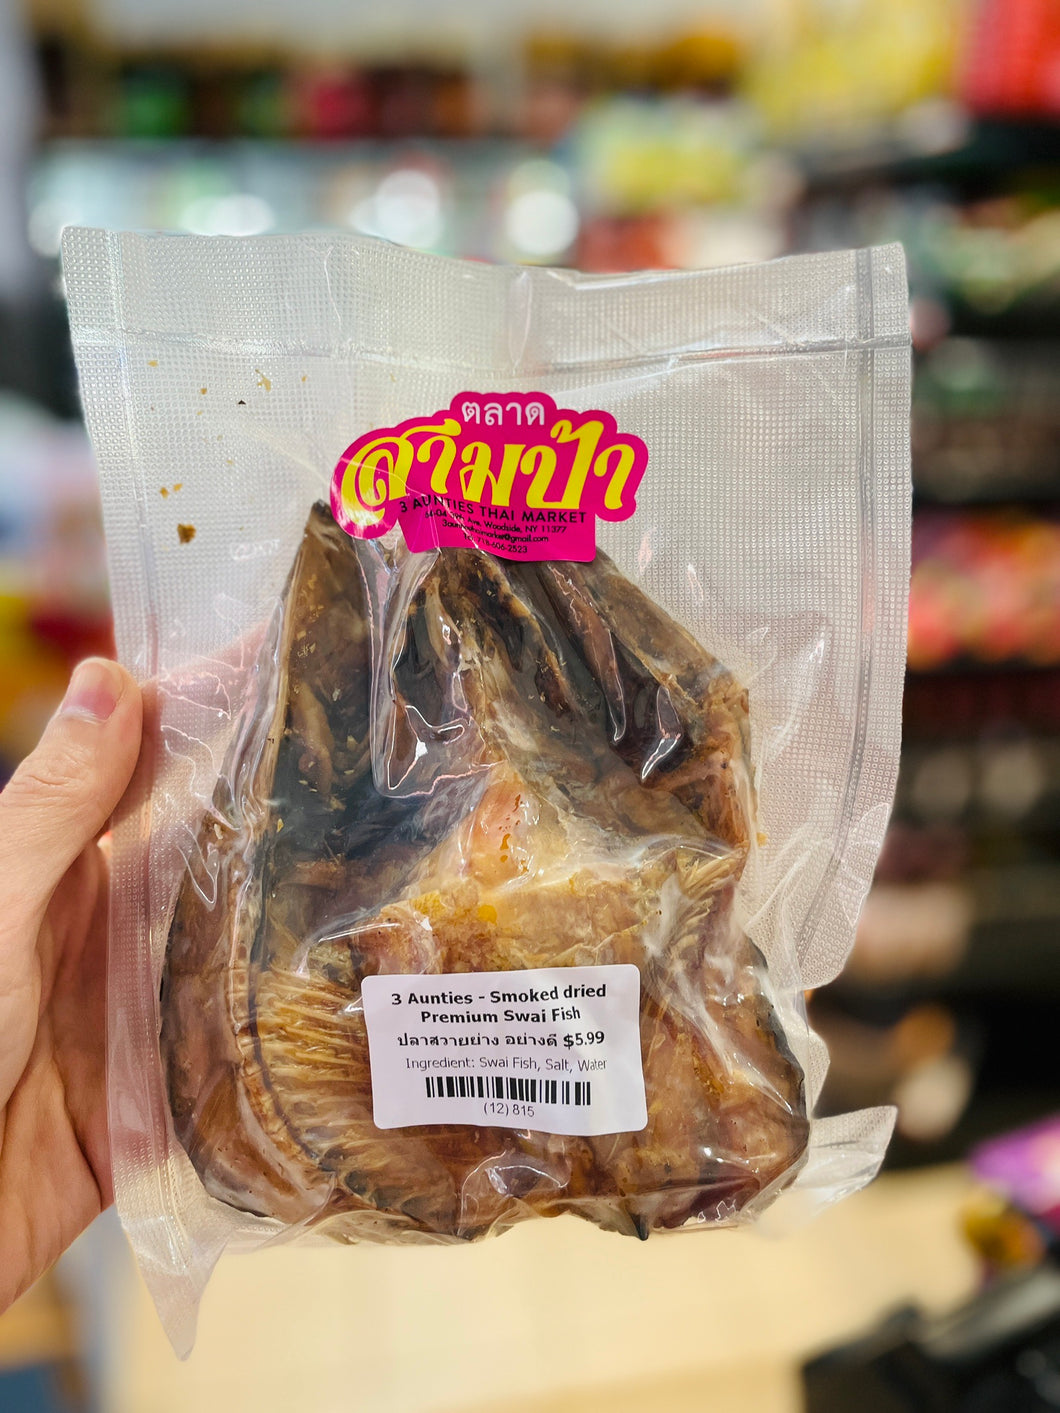 3 Aunties - Smoked dried Premium Swai Fish - ปลาสวายย่าง อย่างดี